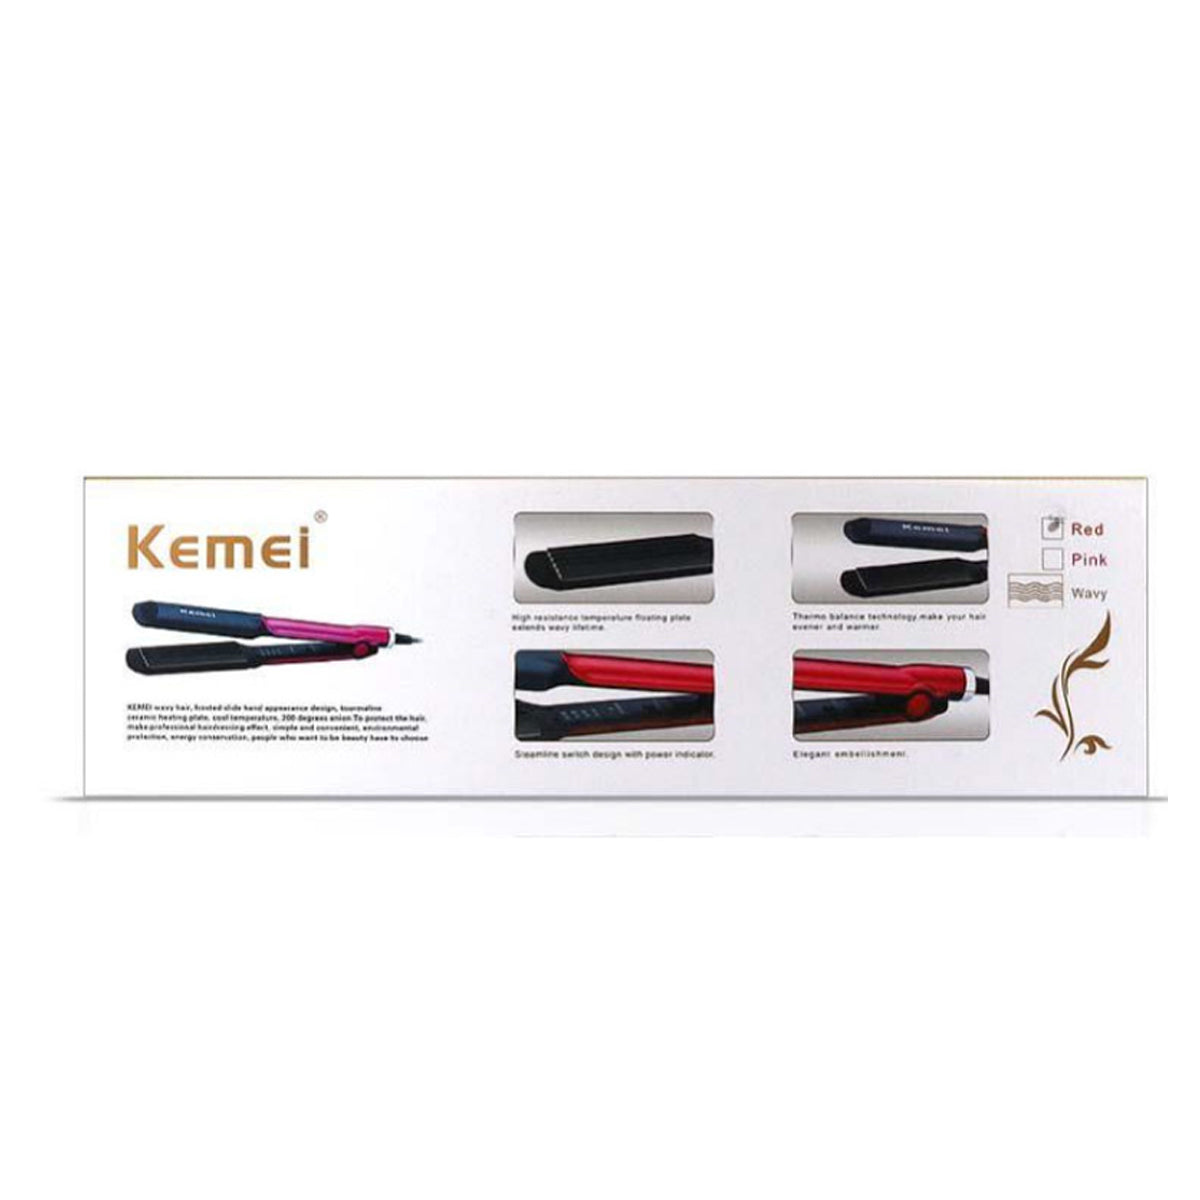 Kemei KM-533 Professional Hair Crimper